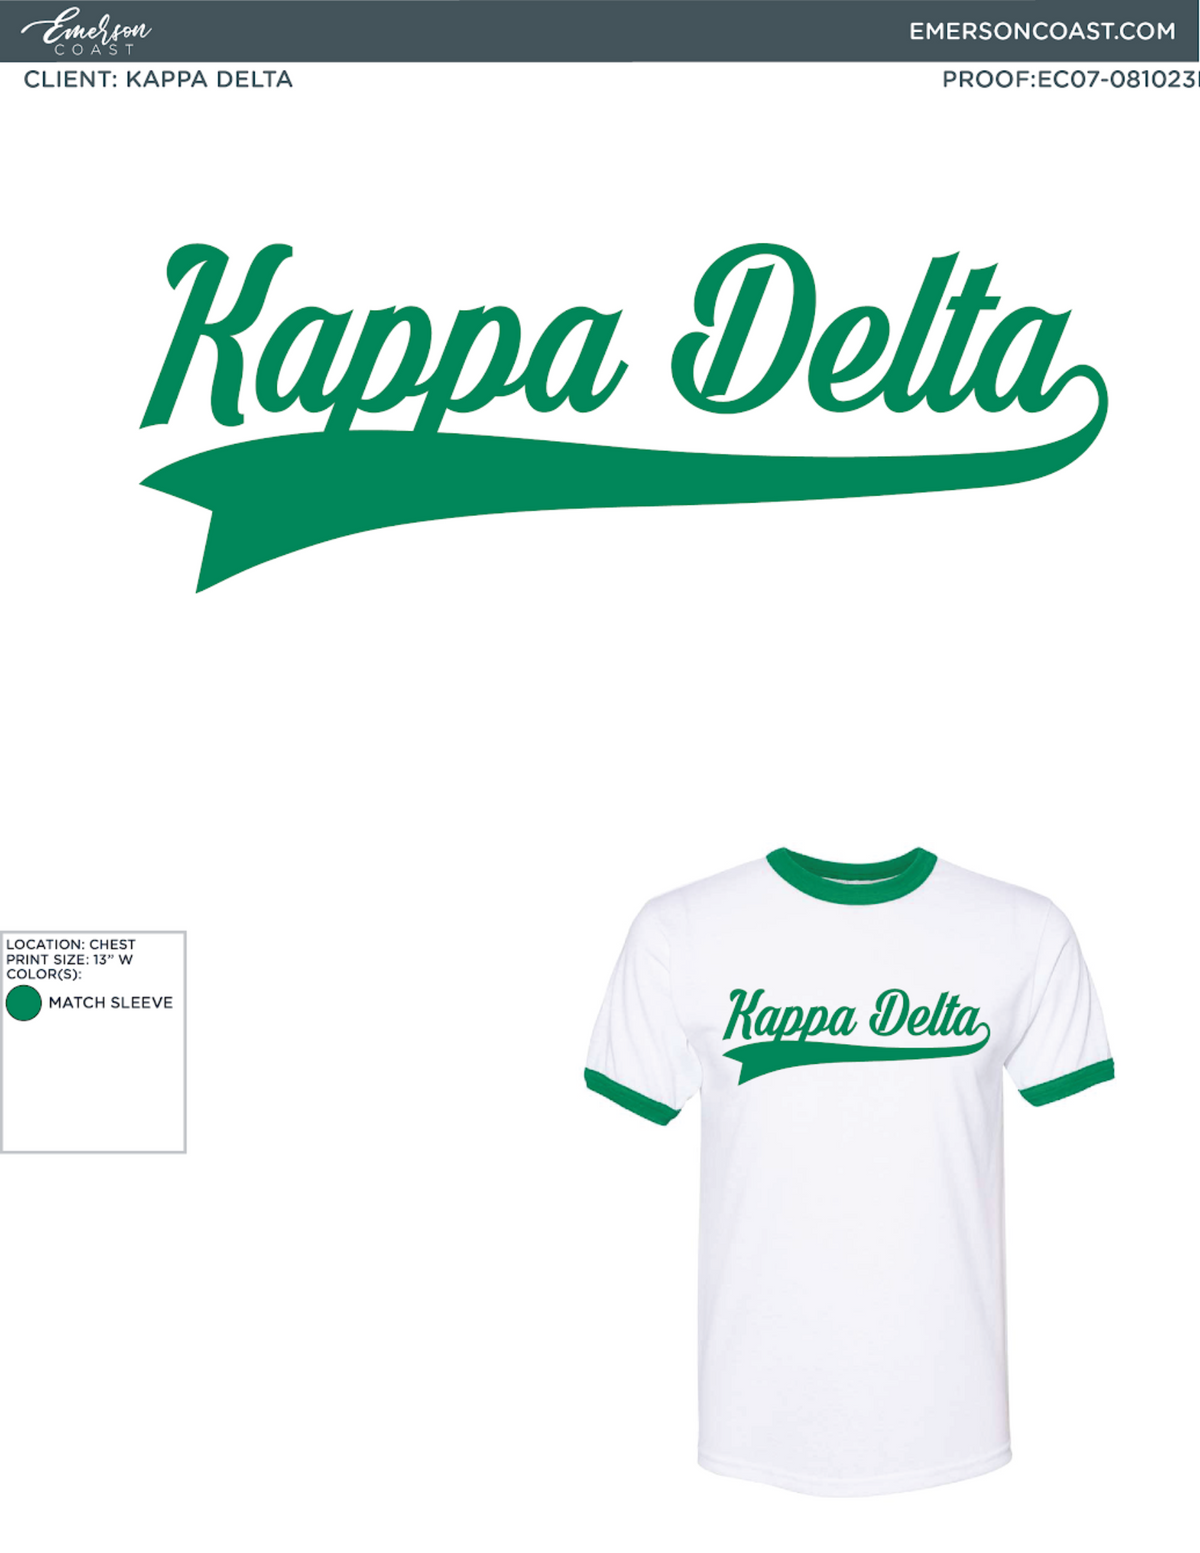 Kappa Delta Green and White Ringer Tee